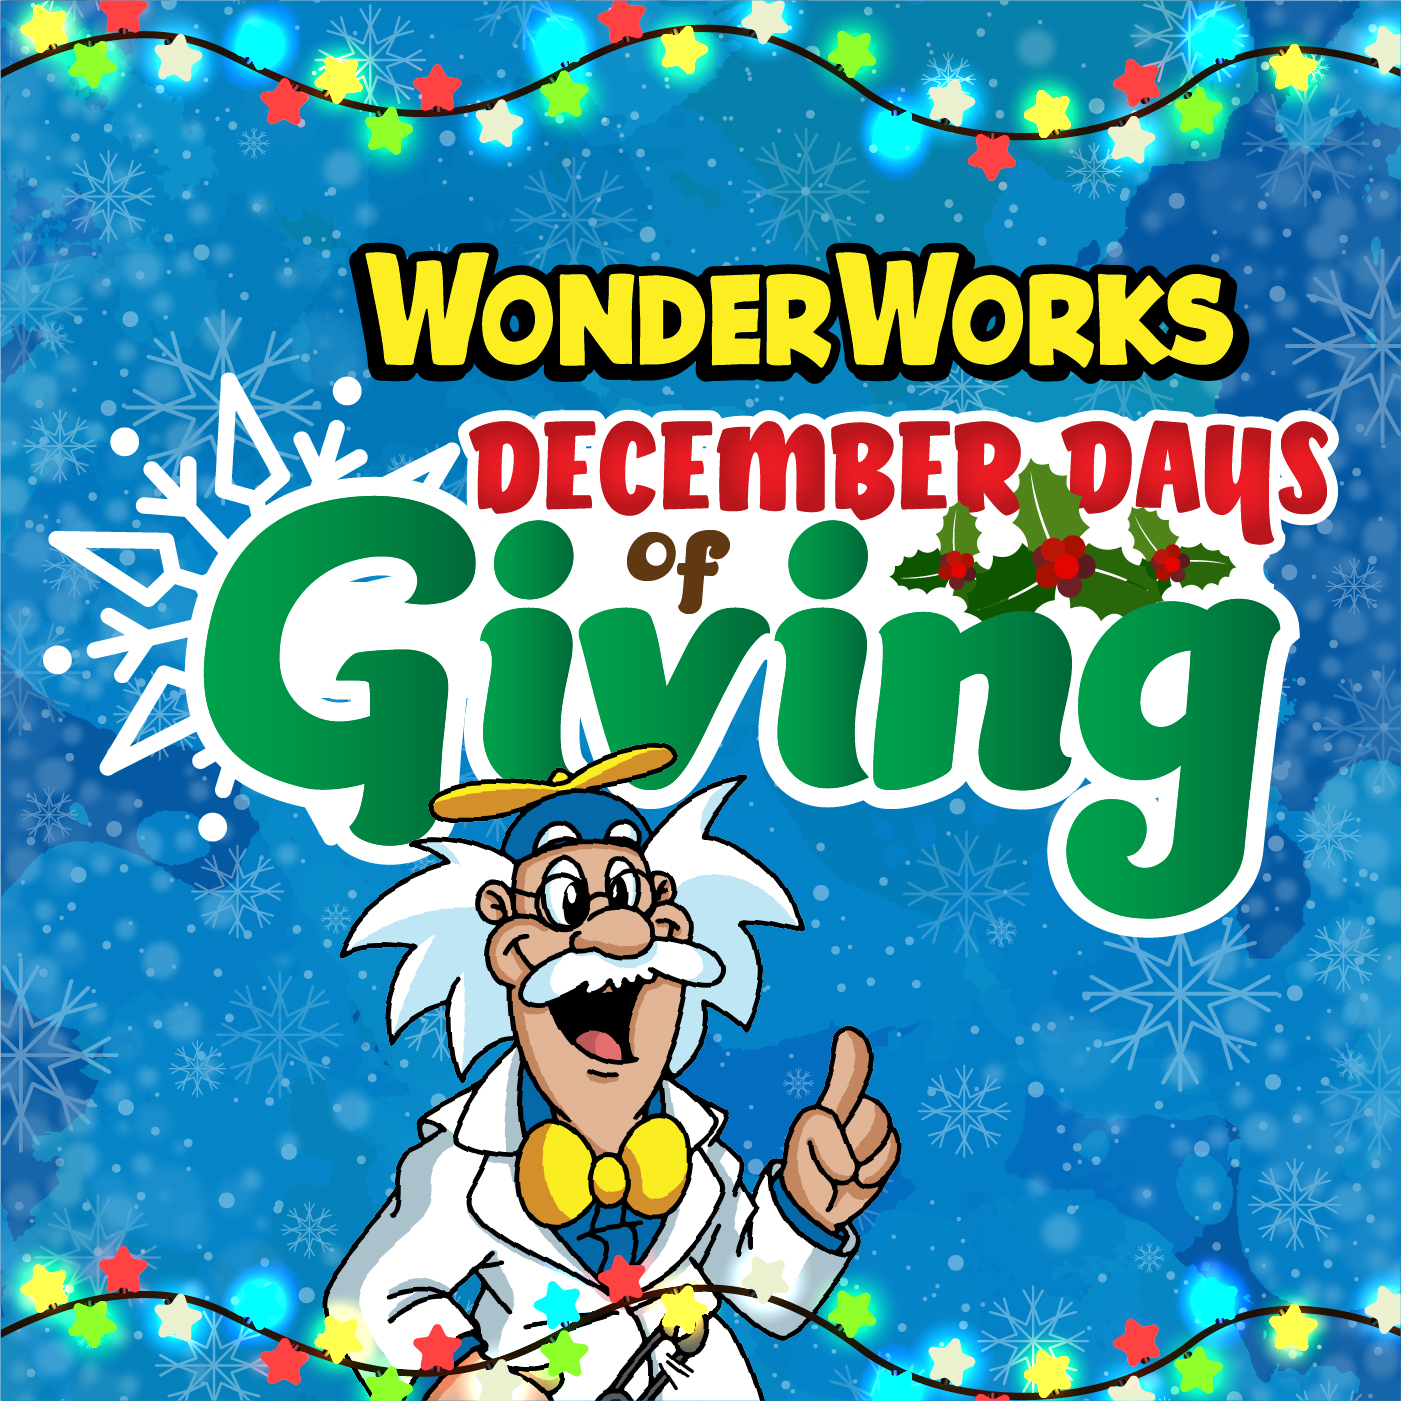 WonderWorks Announces December Days of Giving